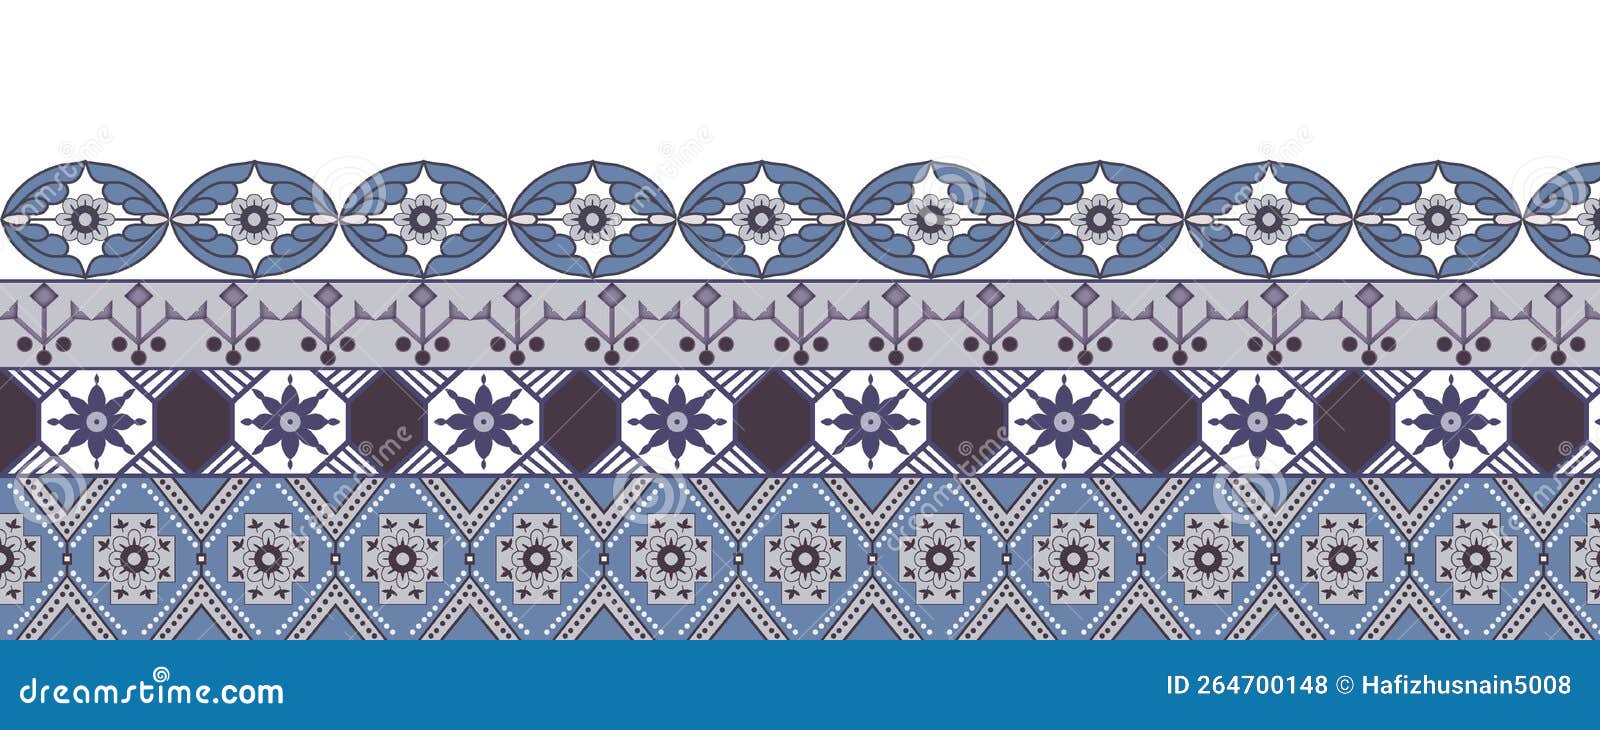 a beautiful geometric ornament ethnic style border  handmade artwork pattern.